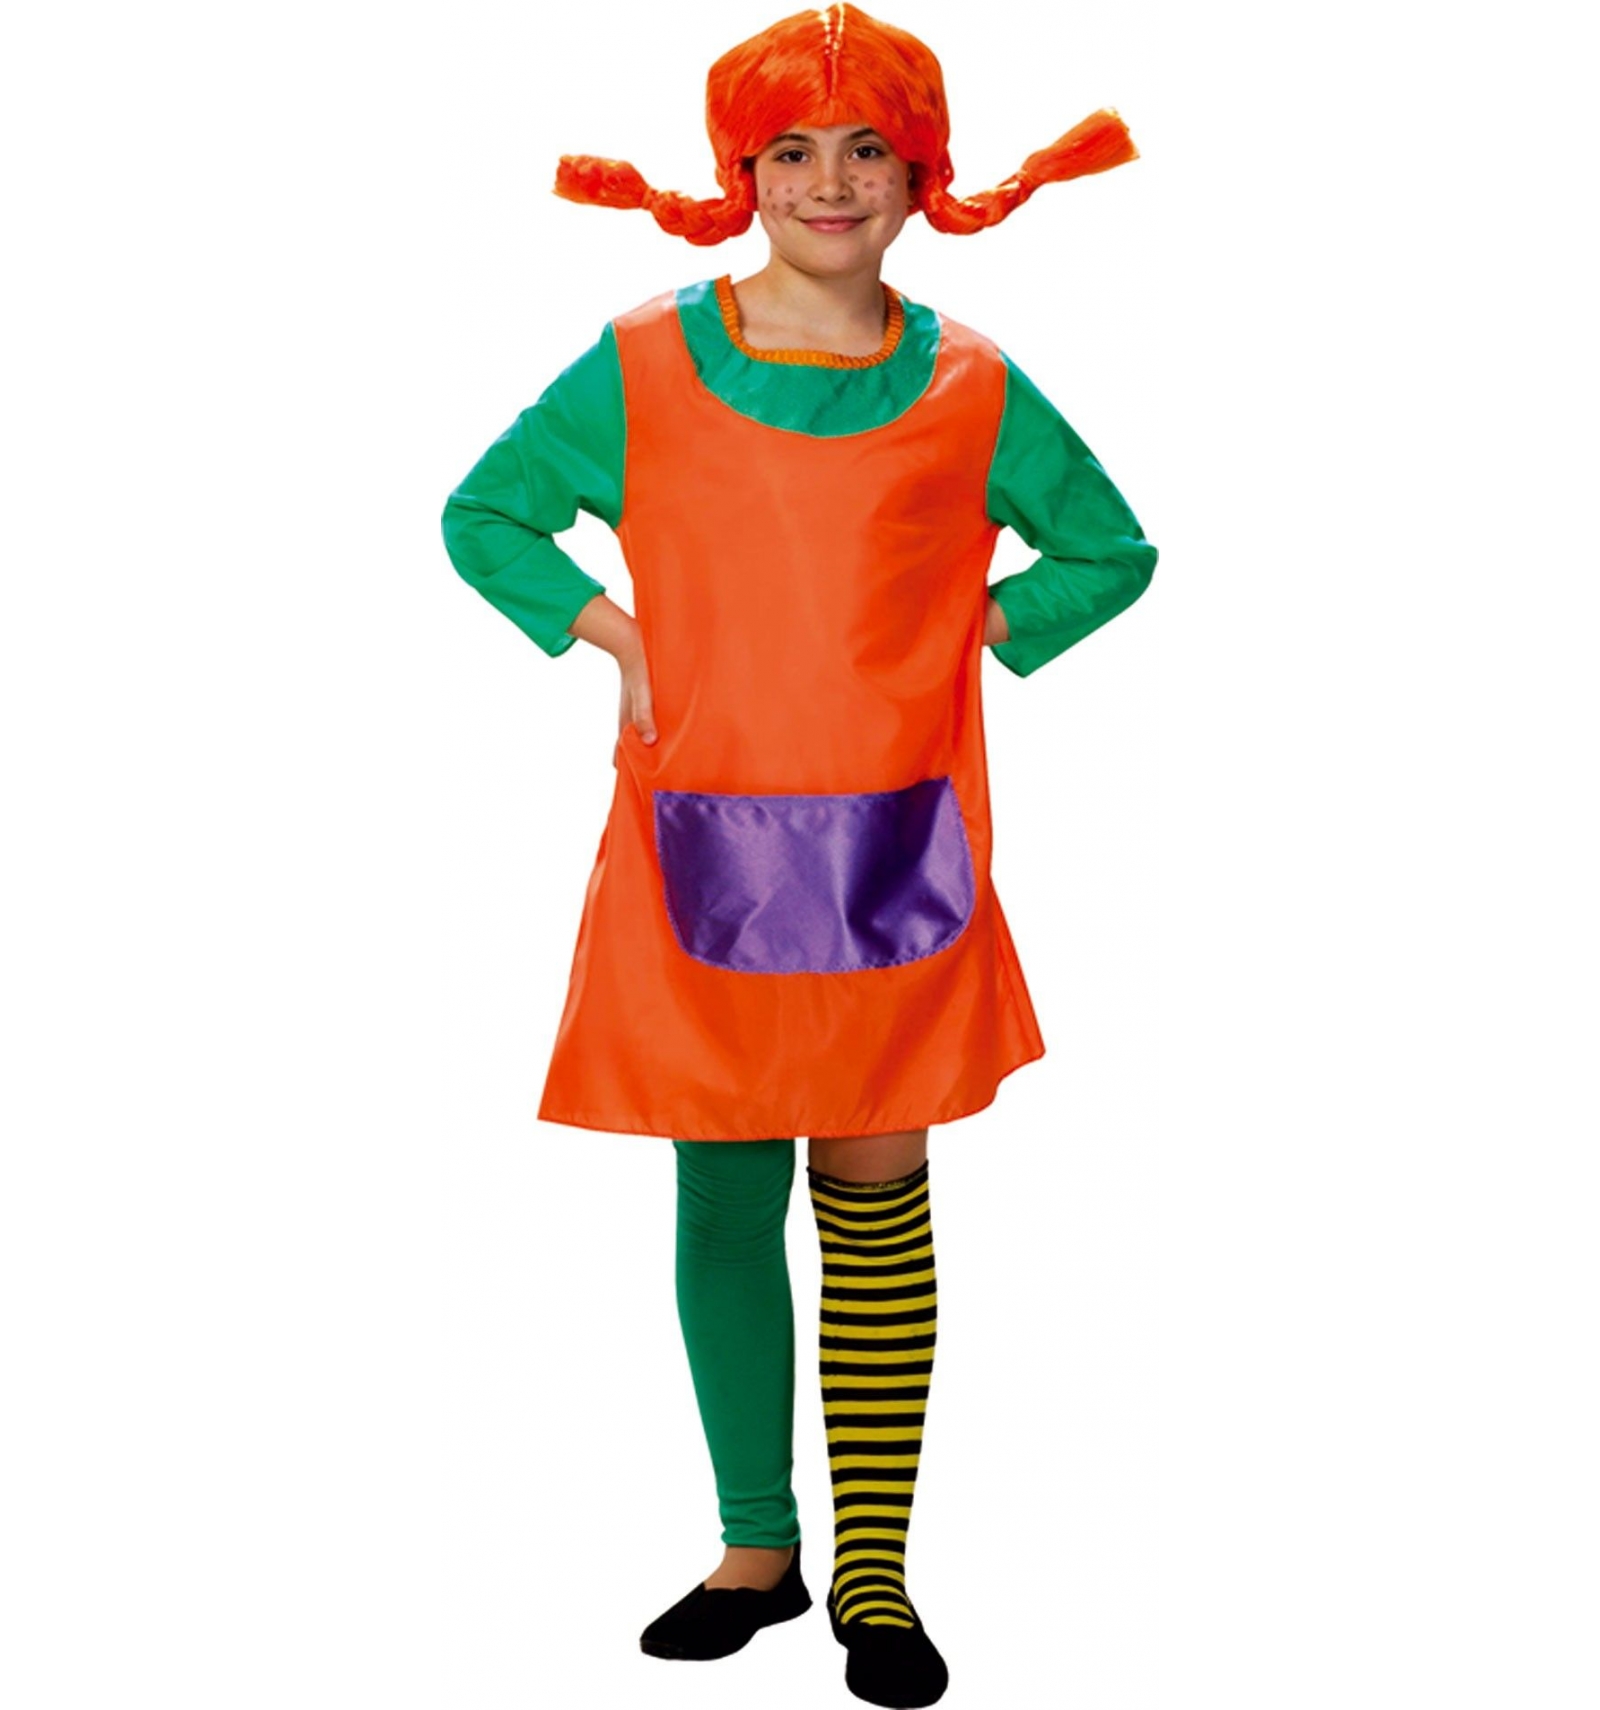 Pippi Longstocking kids costume - Your Online Costume Store